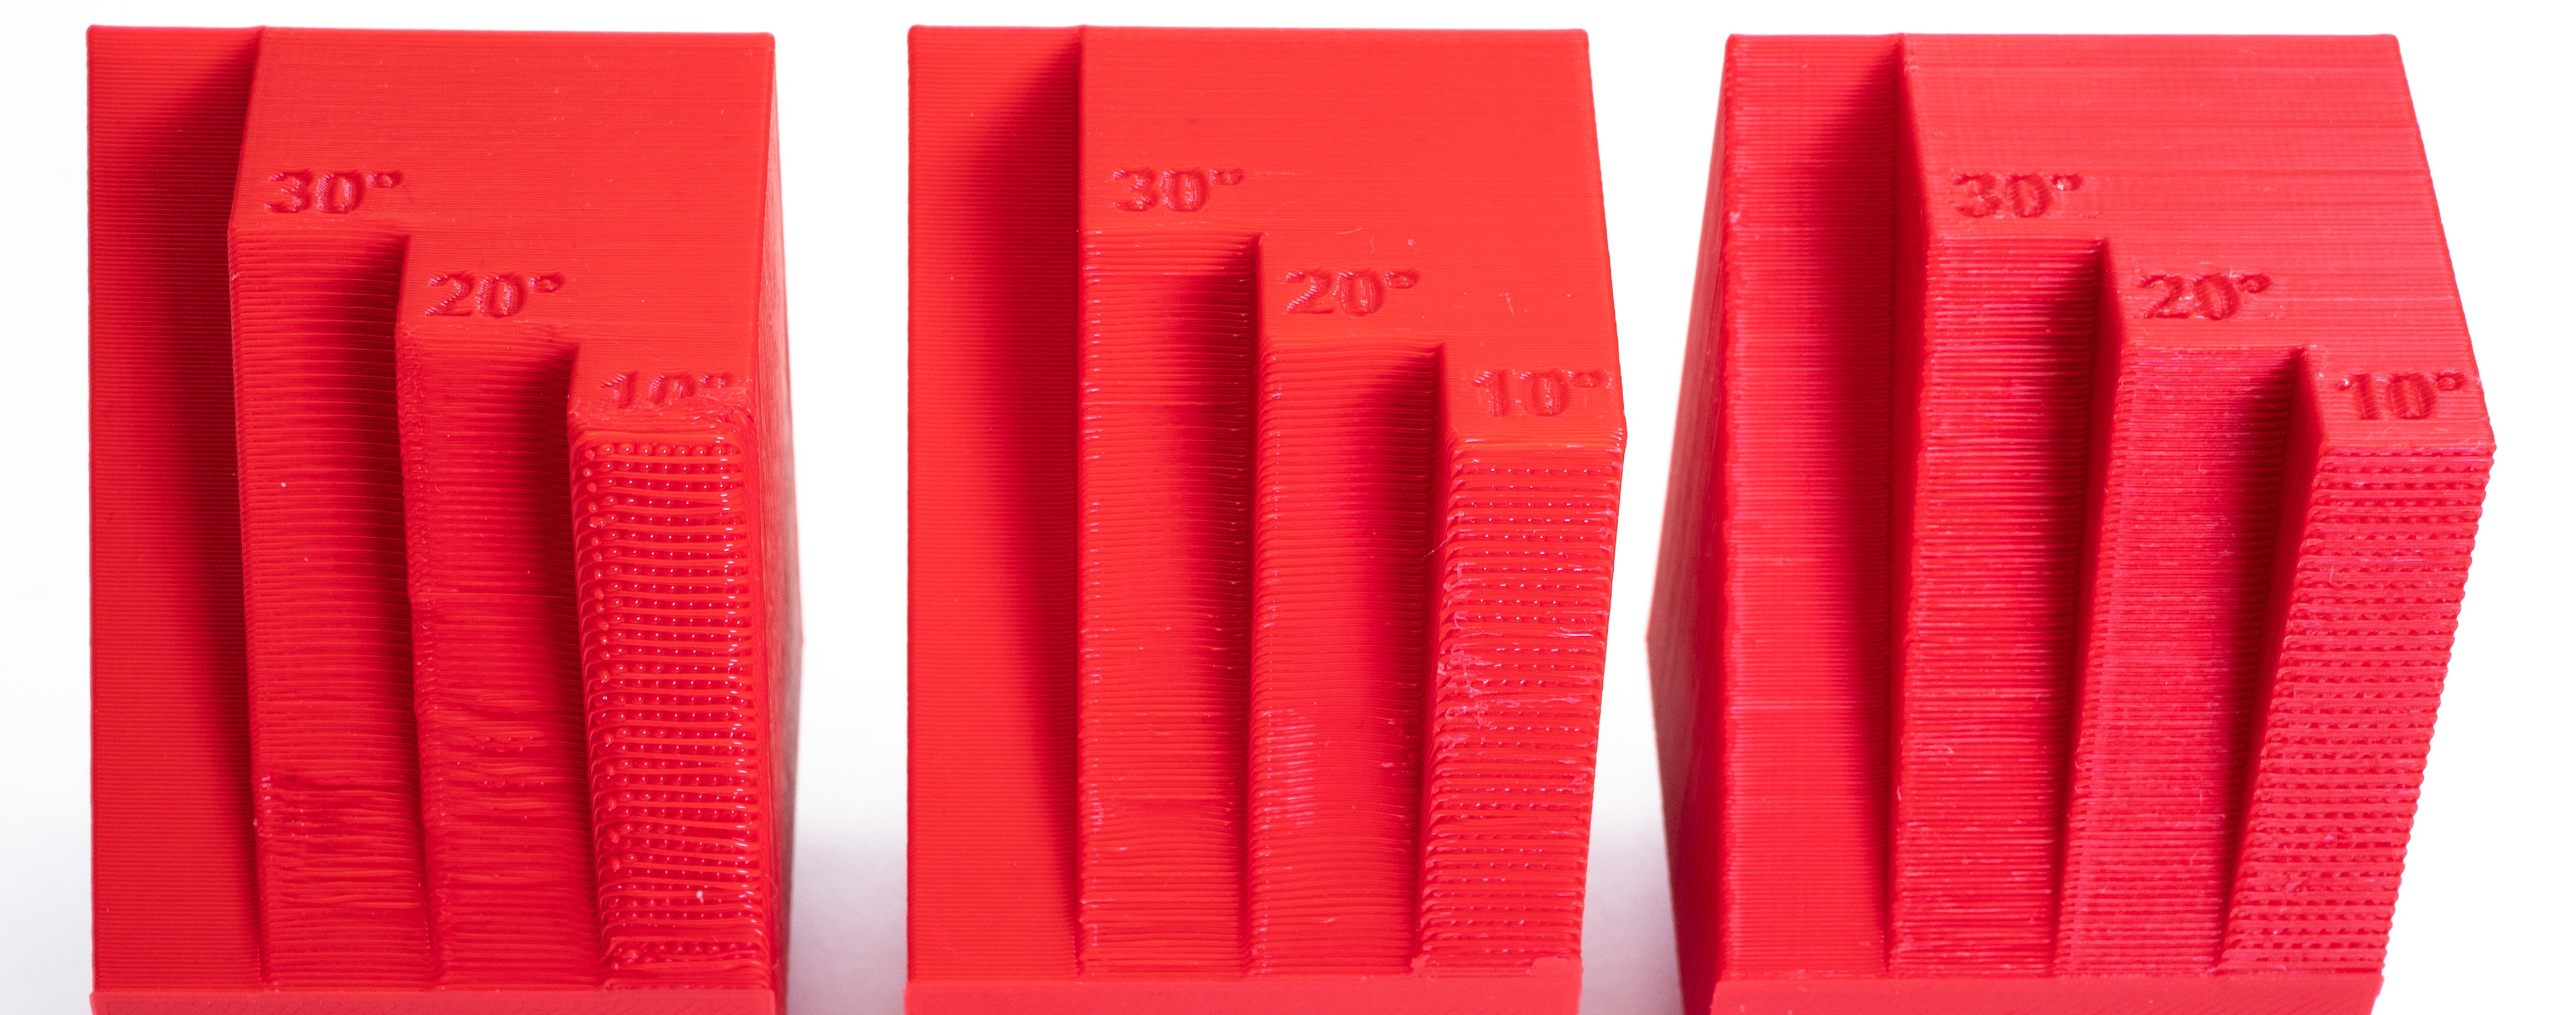 Strangest Upside-Down 3D Printer Fits In A Filament Box